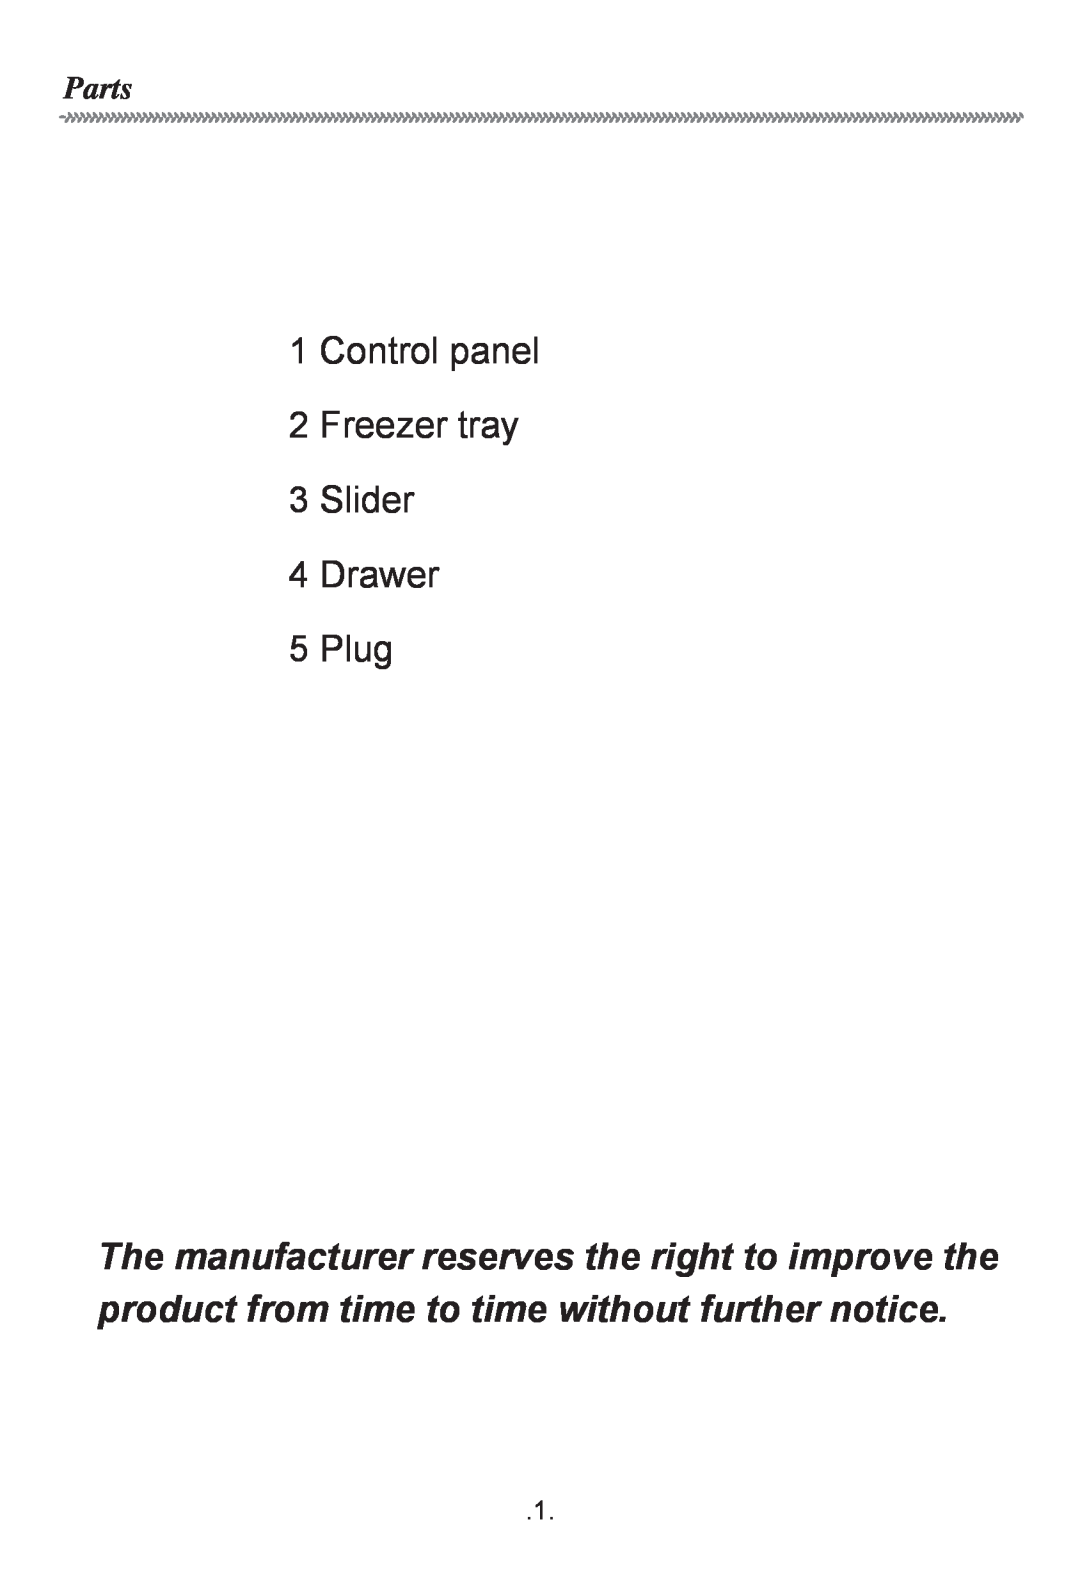 Haier HF-116R owner manual Control panel 2 Freezer tray 3Slider 4Drawer, 5Plug, Parts 